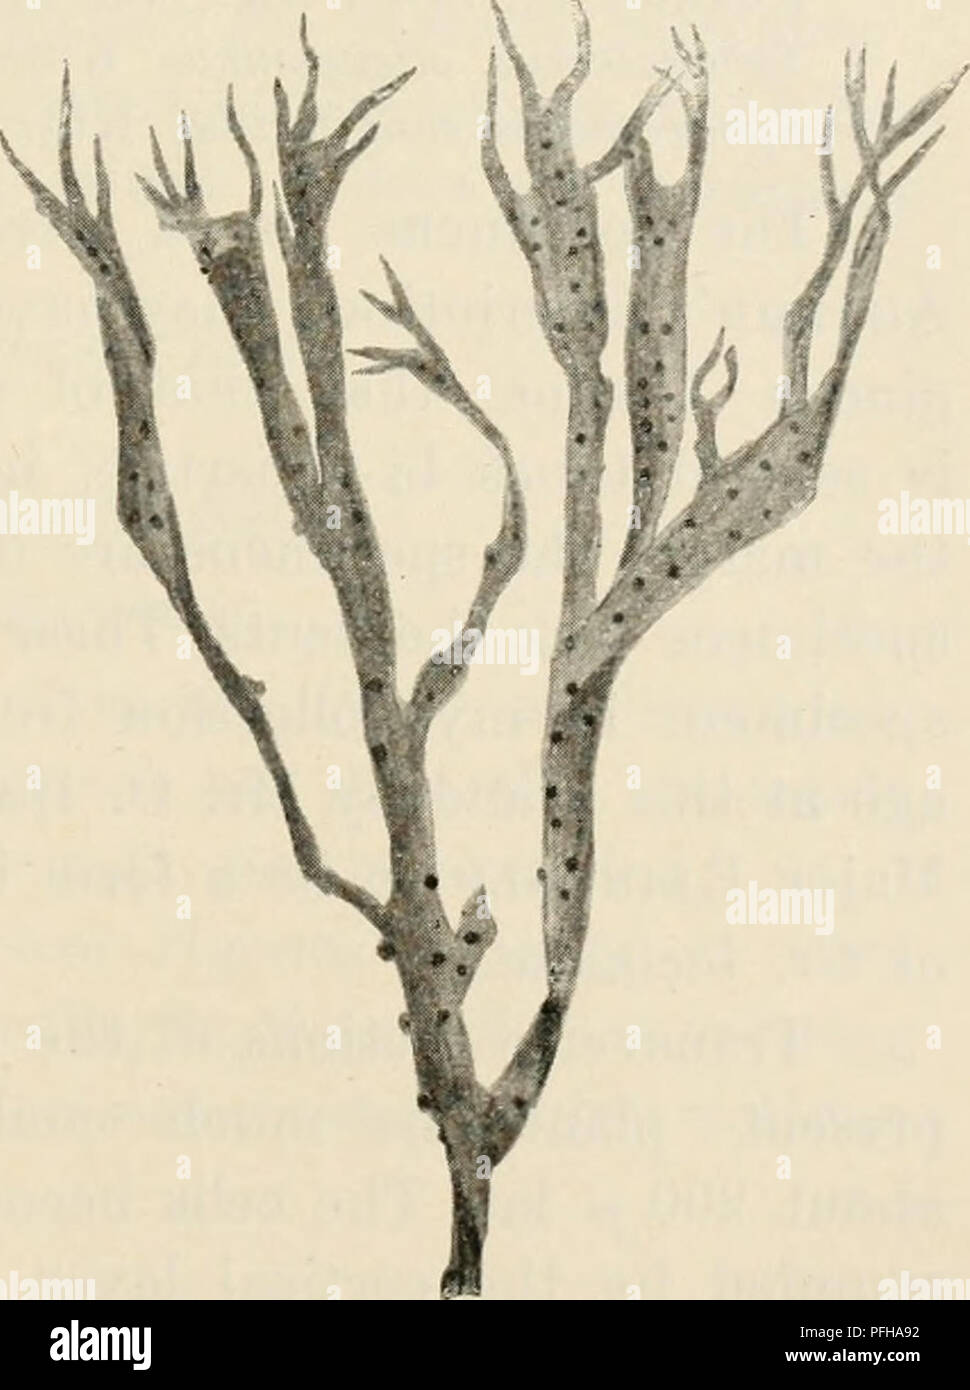 . Dansk botanisk arkiv. Piante; piante -- la Danimarca. F. Børgesen: Rhodophyceae danese W. Indie. 379 8. Gracilaria laciQuIata (Vahl). Il Fucus lacinulatus Vahl, Endeel piantatrice kryptogamiske fra St. Croix (1799) in Skrivter af Naturhistorie-Selskabet, 5. Bd., 2. Hefte, Kiøbenhavn 1802. Gracilaria multipartita (Clem.) J. Ag., Alg. Mediterr., 1842, p. 151; Spec. Alg., vol. II, p. 600; Epicr., p. 423. Harvey, Phycol. Brit., pi. XV; Nereis Bor-Am., p. 107. Sphaerococcus multipartitus Ag., Spec. Alg., p. 247. Il Fucus multipartitus Clemente, Ensajo, Madrid 1807, p. 311 (non vidi). Per ulteriori sinonimi co Foto Stock